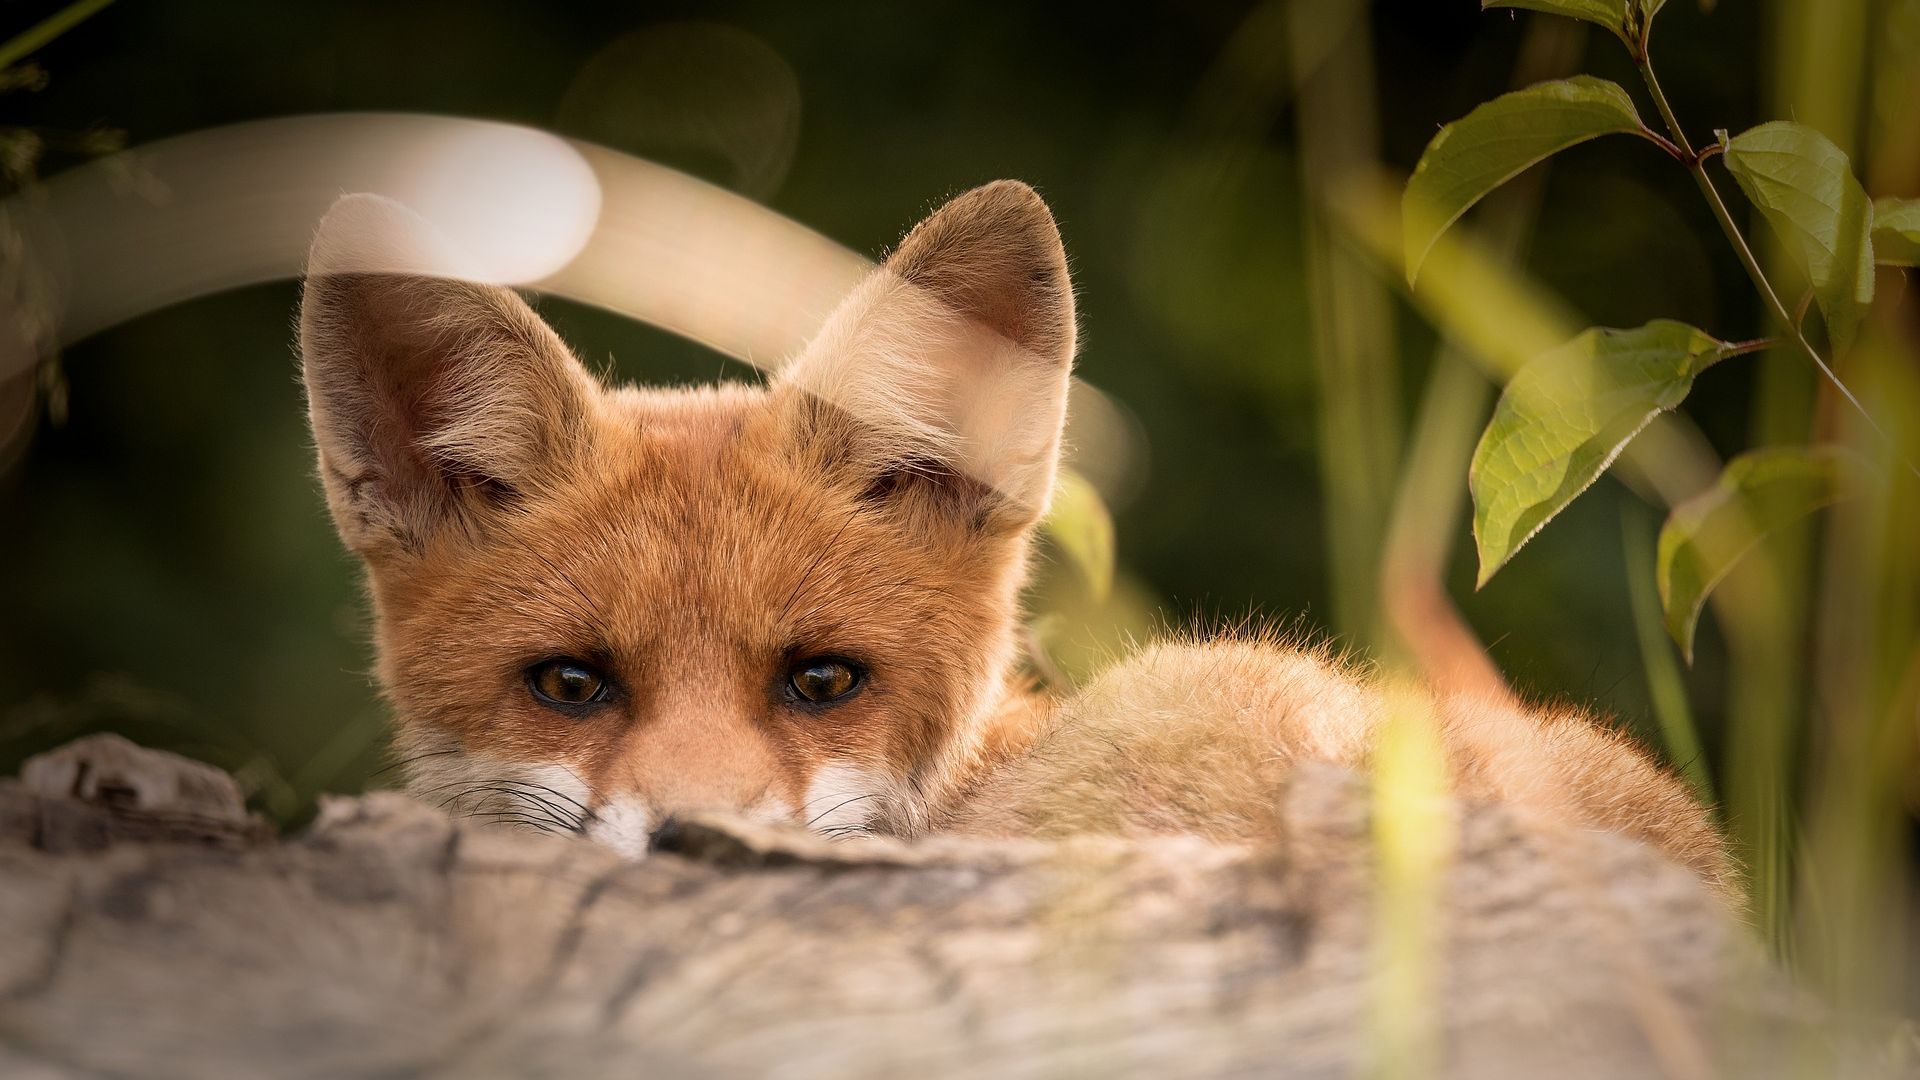 Download Desktop Wallpaper Little Fox Animal Baby Animal Cute Hd Image Picture Background F5zhkb